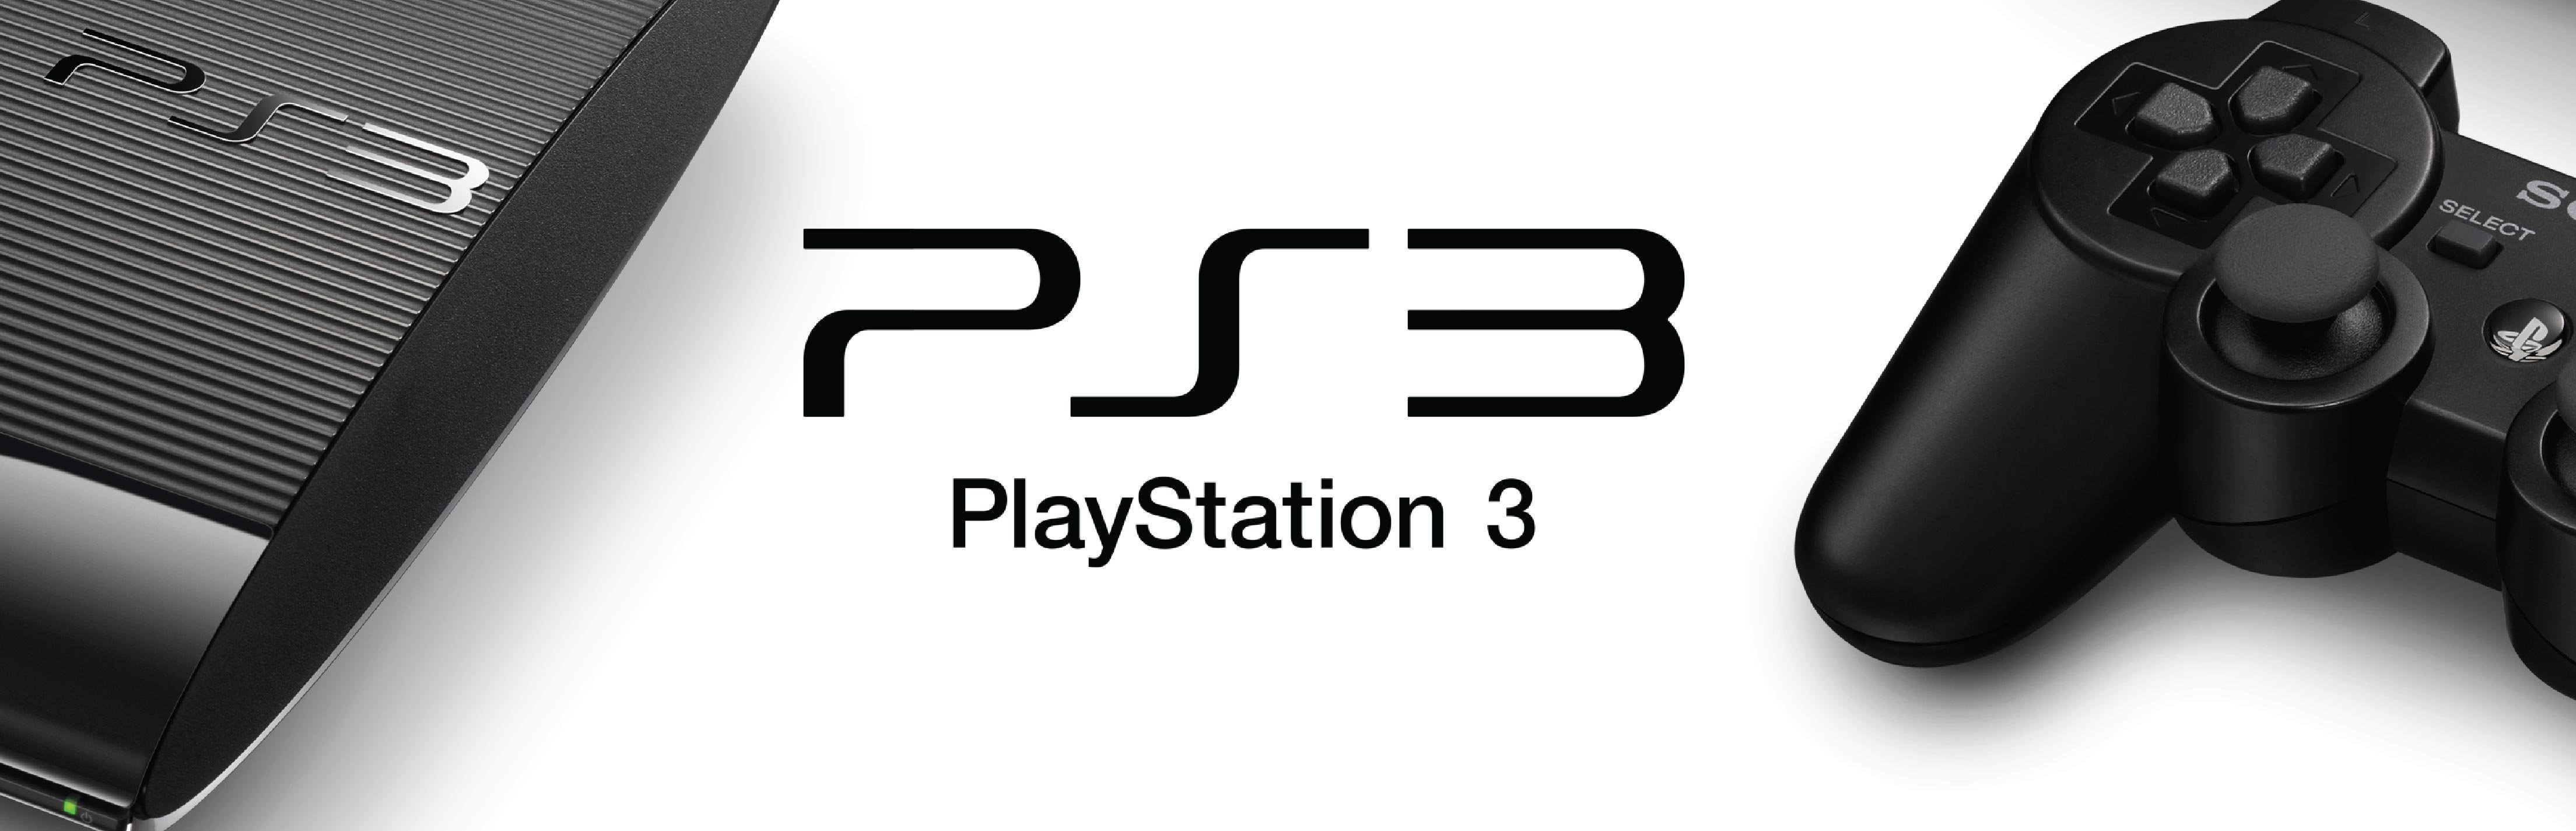 L3 ps5. PLAYSTATION 5. Плейстейшен 3 ps3 logo. Консоль Sony PLAYSTATION лого. PLAYSTATION 3 e3 2005.